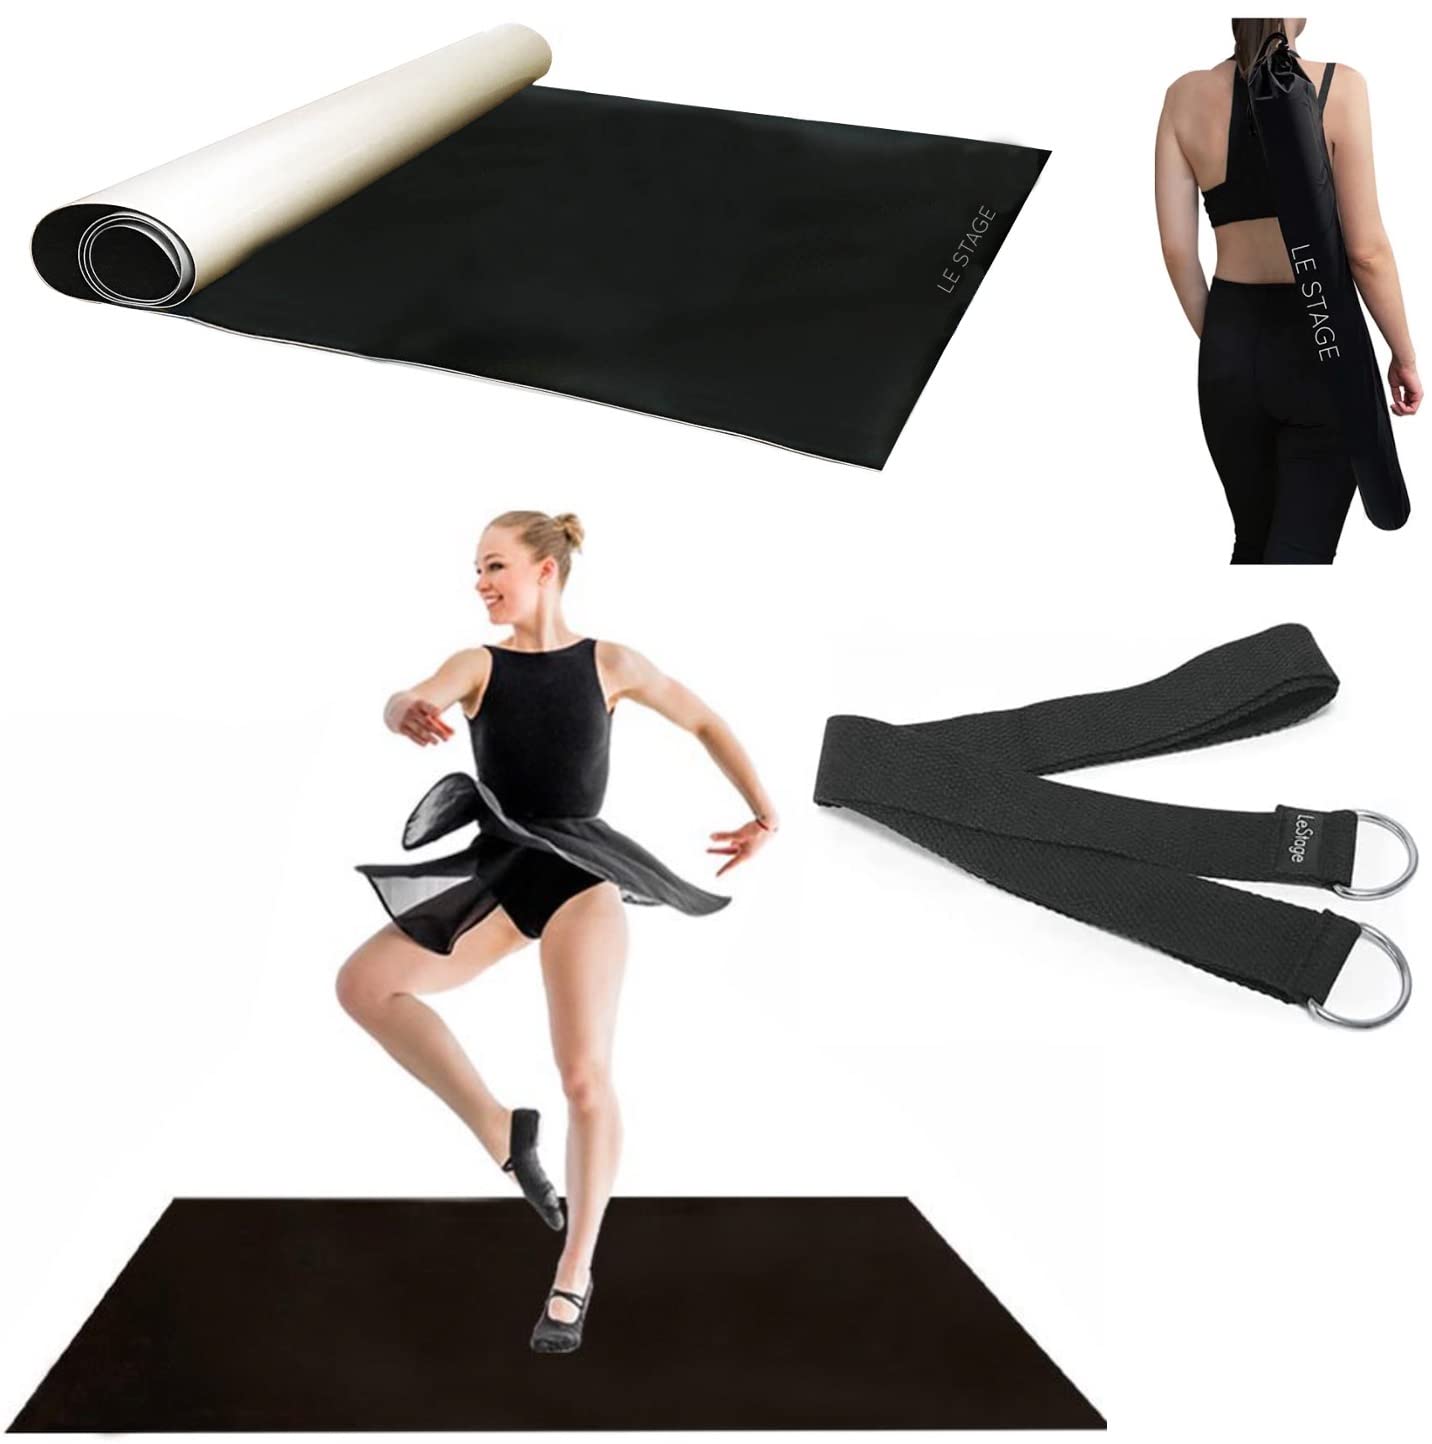 LeStage Dance Floor Portable Dance Floor Mat with Stretch Strap